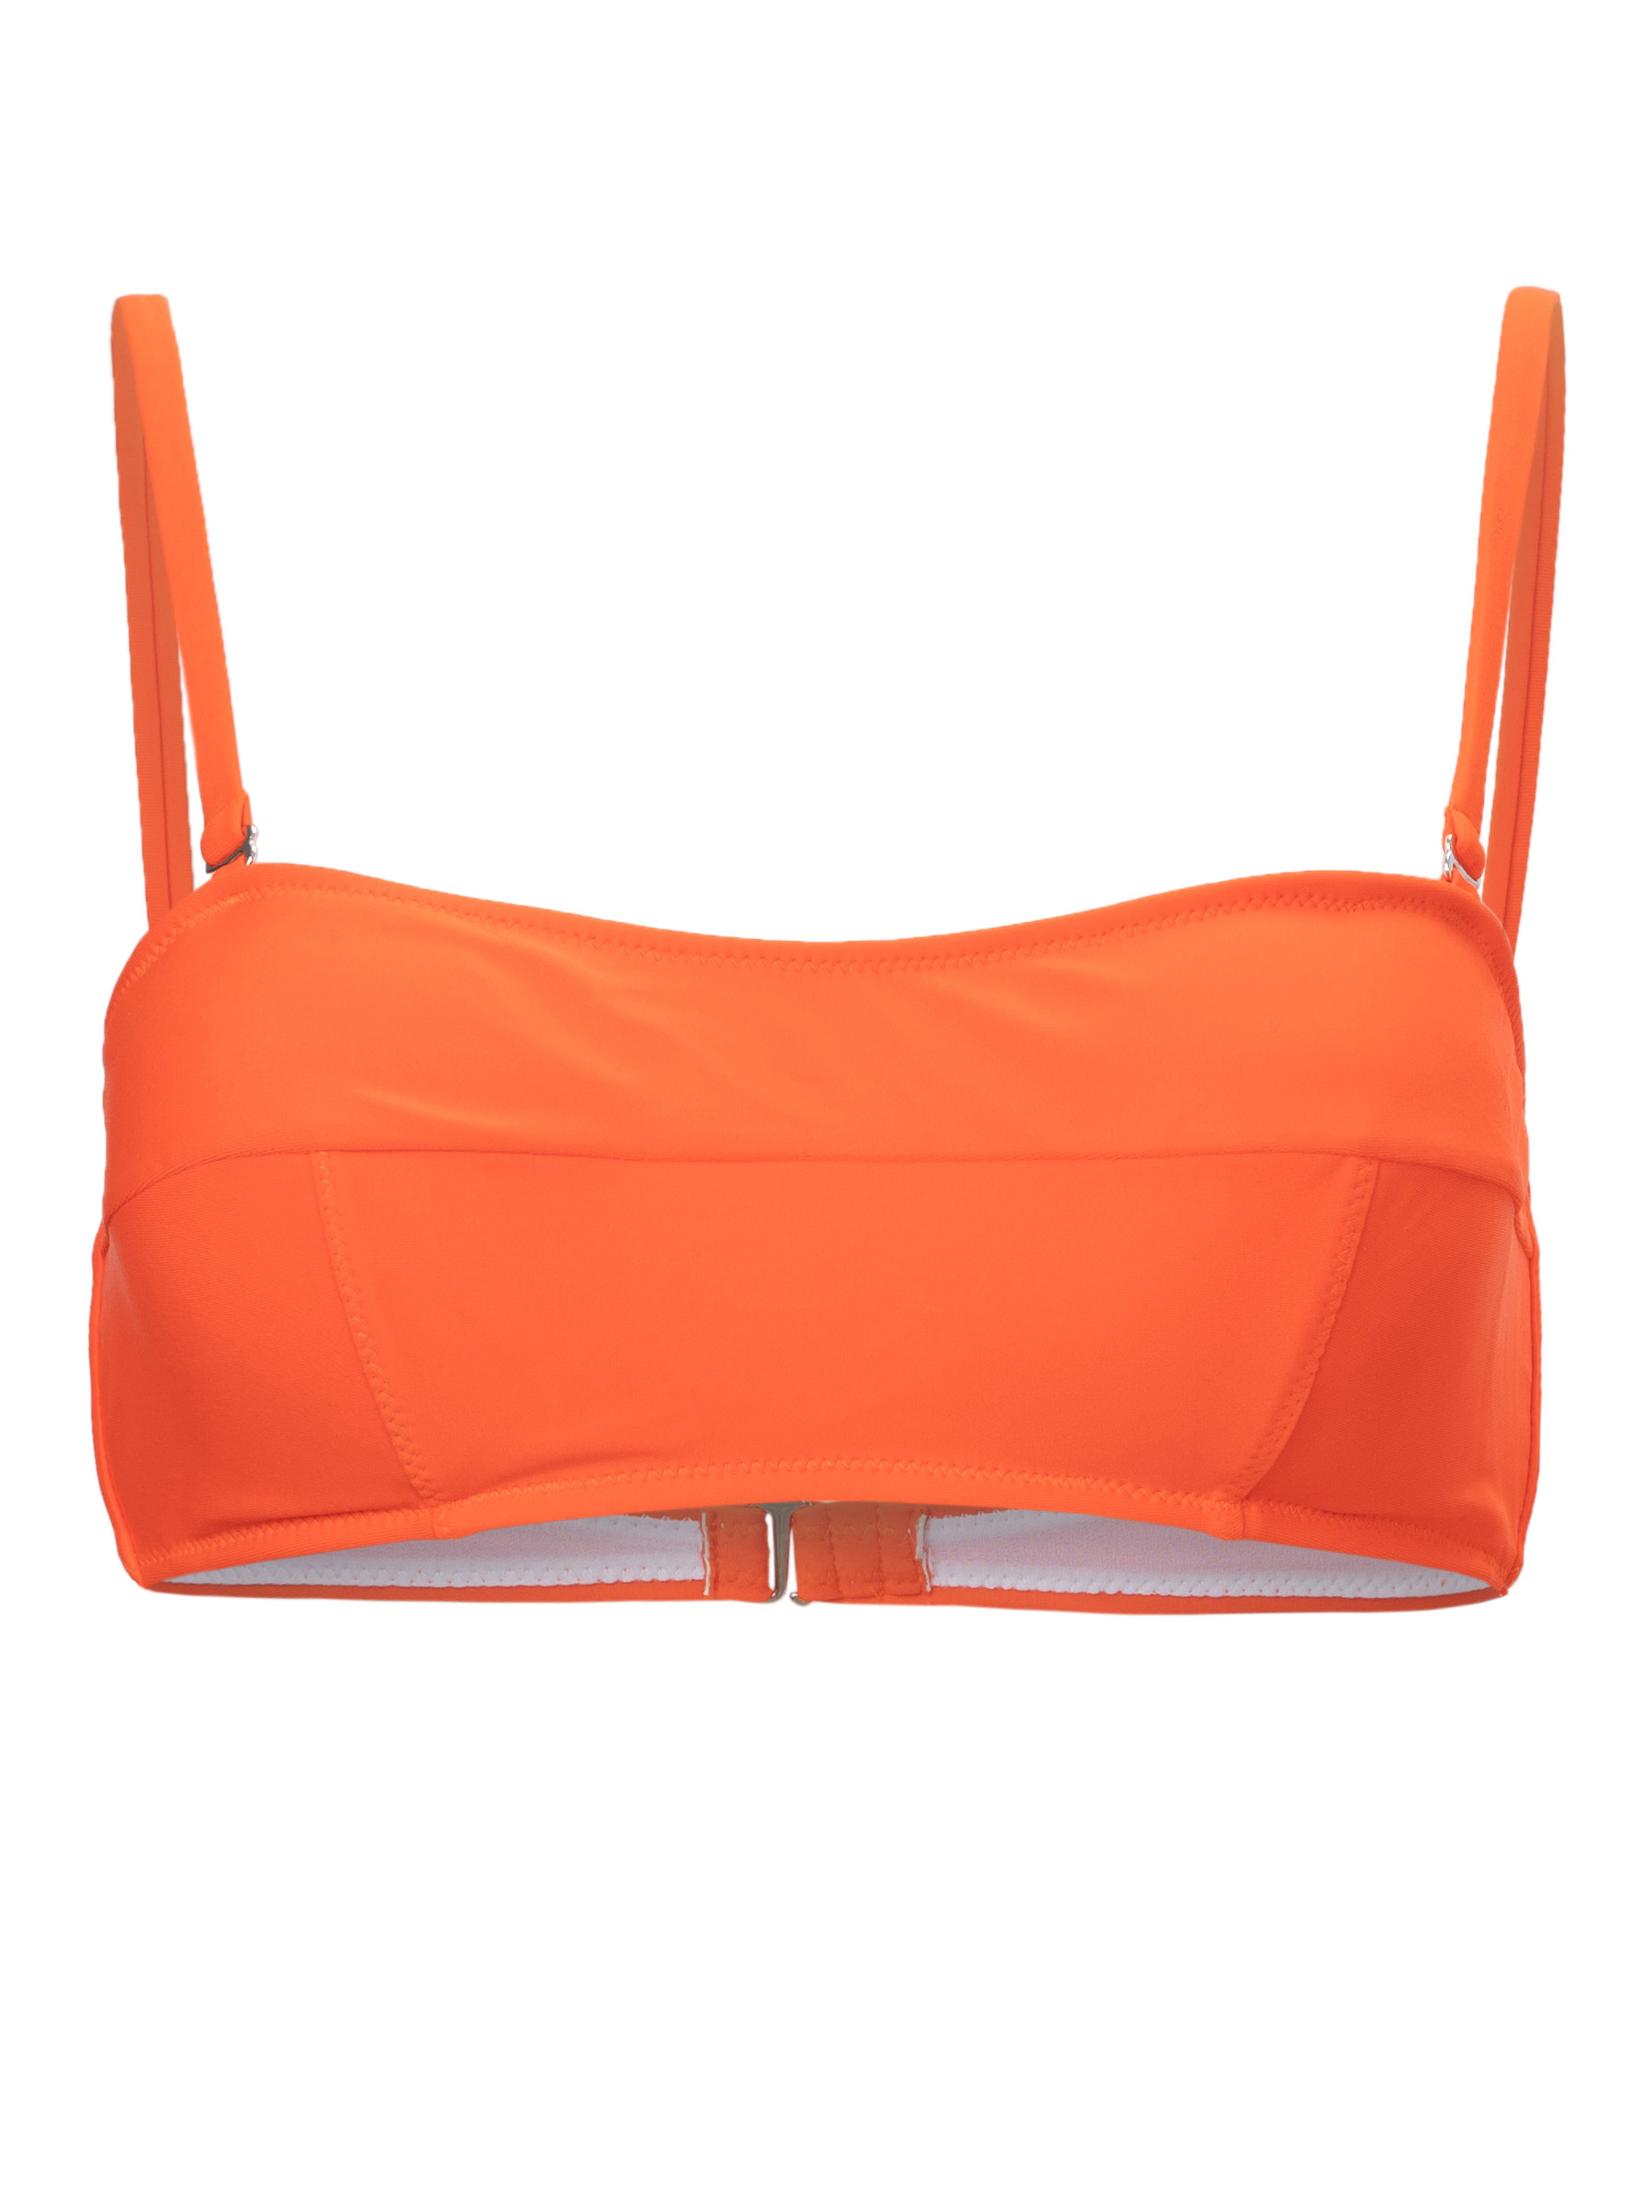 Selected image for BRILLE Ženski gornji deo kupaćeg kostima LILY narandžasti